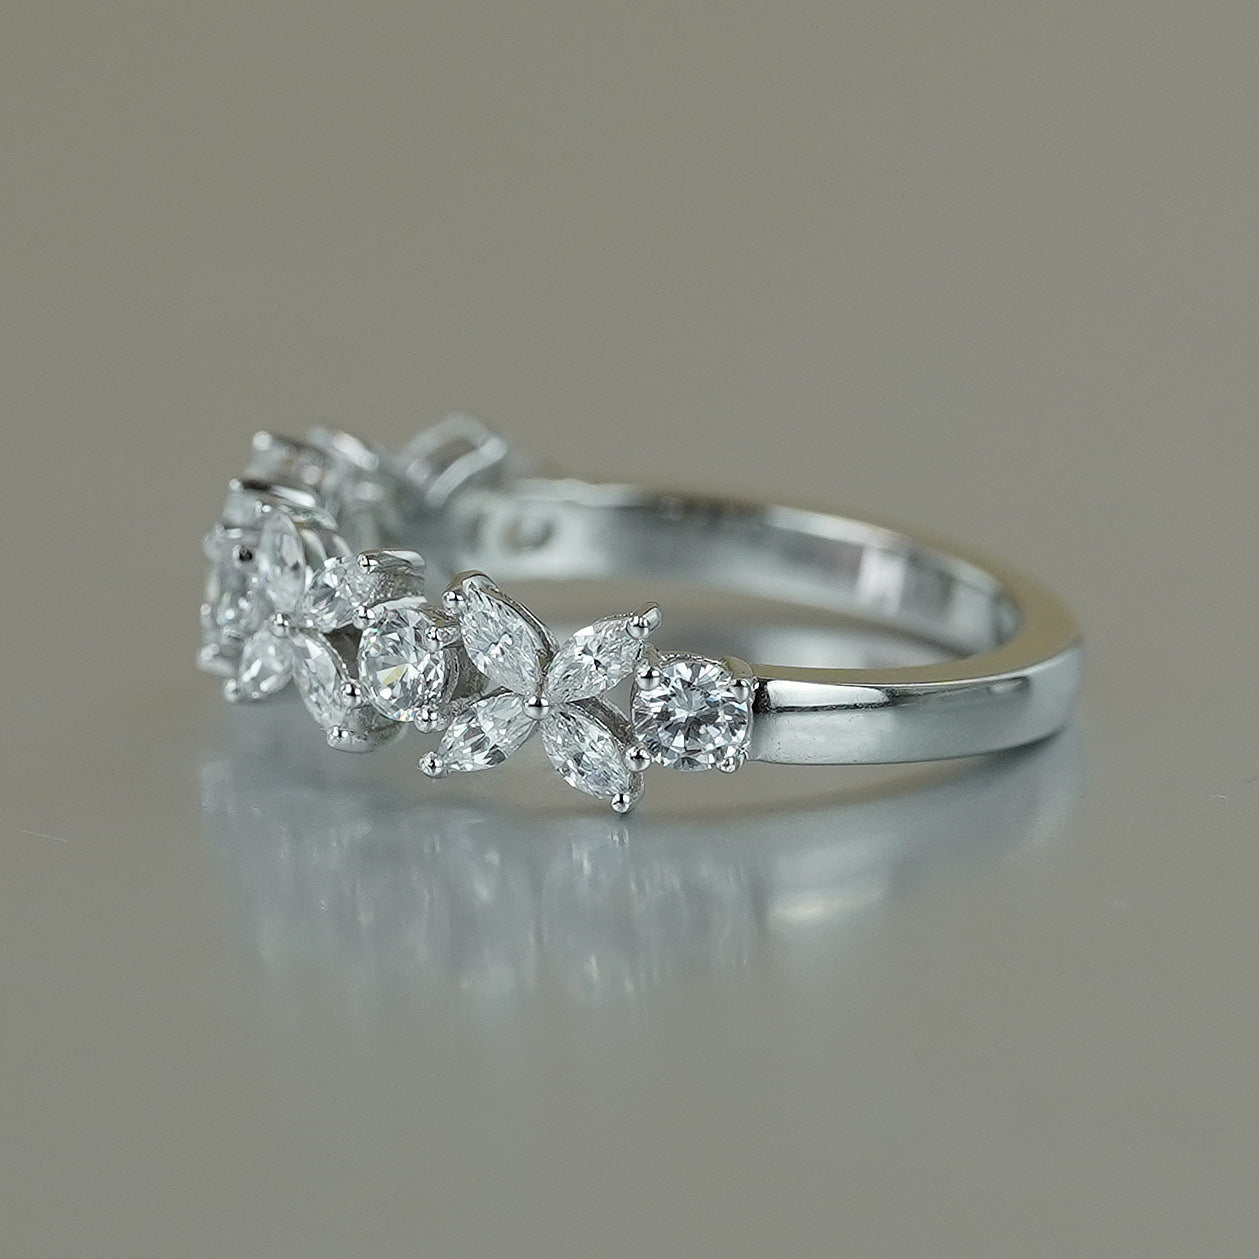 Marquise Moissan, Lucky Clover Diamond Ring, Silver Plated 18K White Gold, Half Diamond Row Ring, Versatile